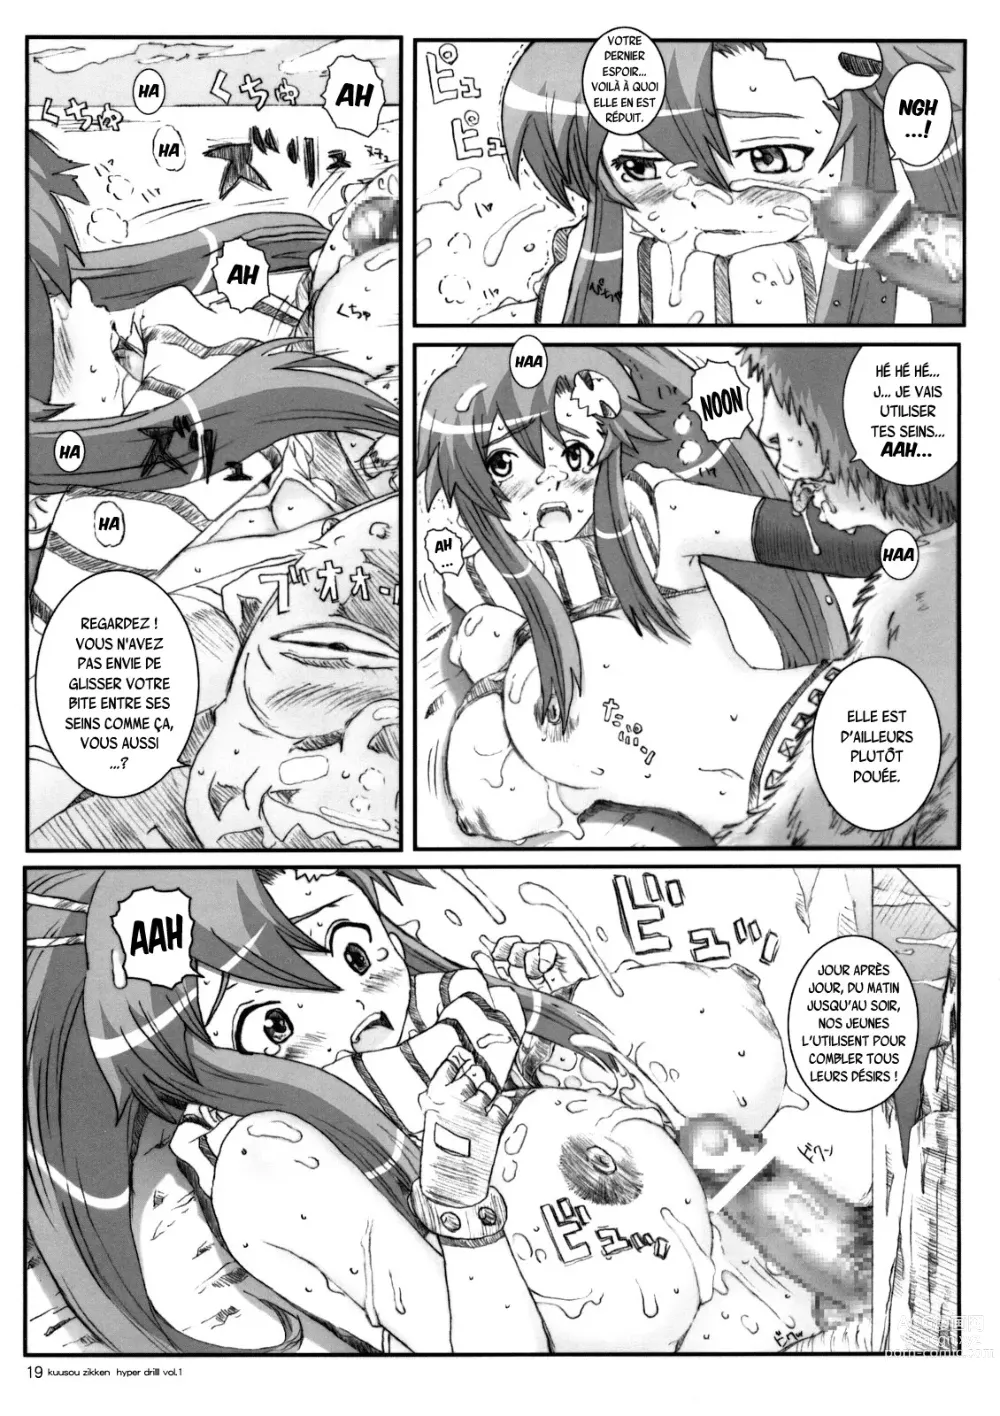 Page 18 of doujinshi Kuusou Zikken Hyper Drill Vol. 1